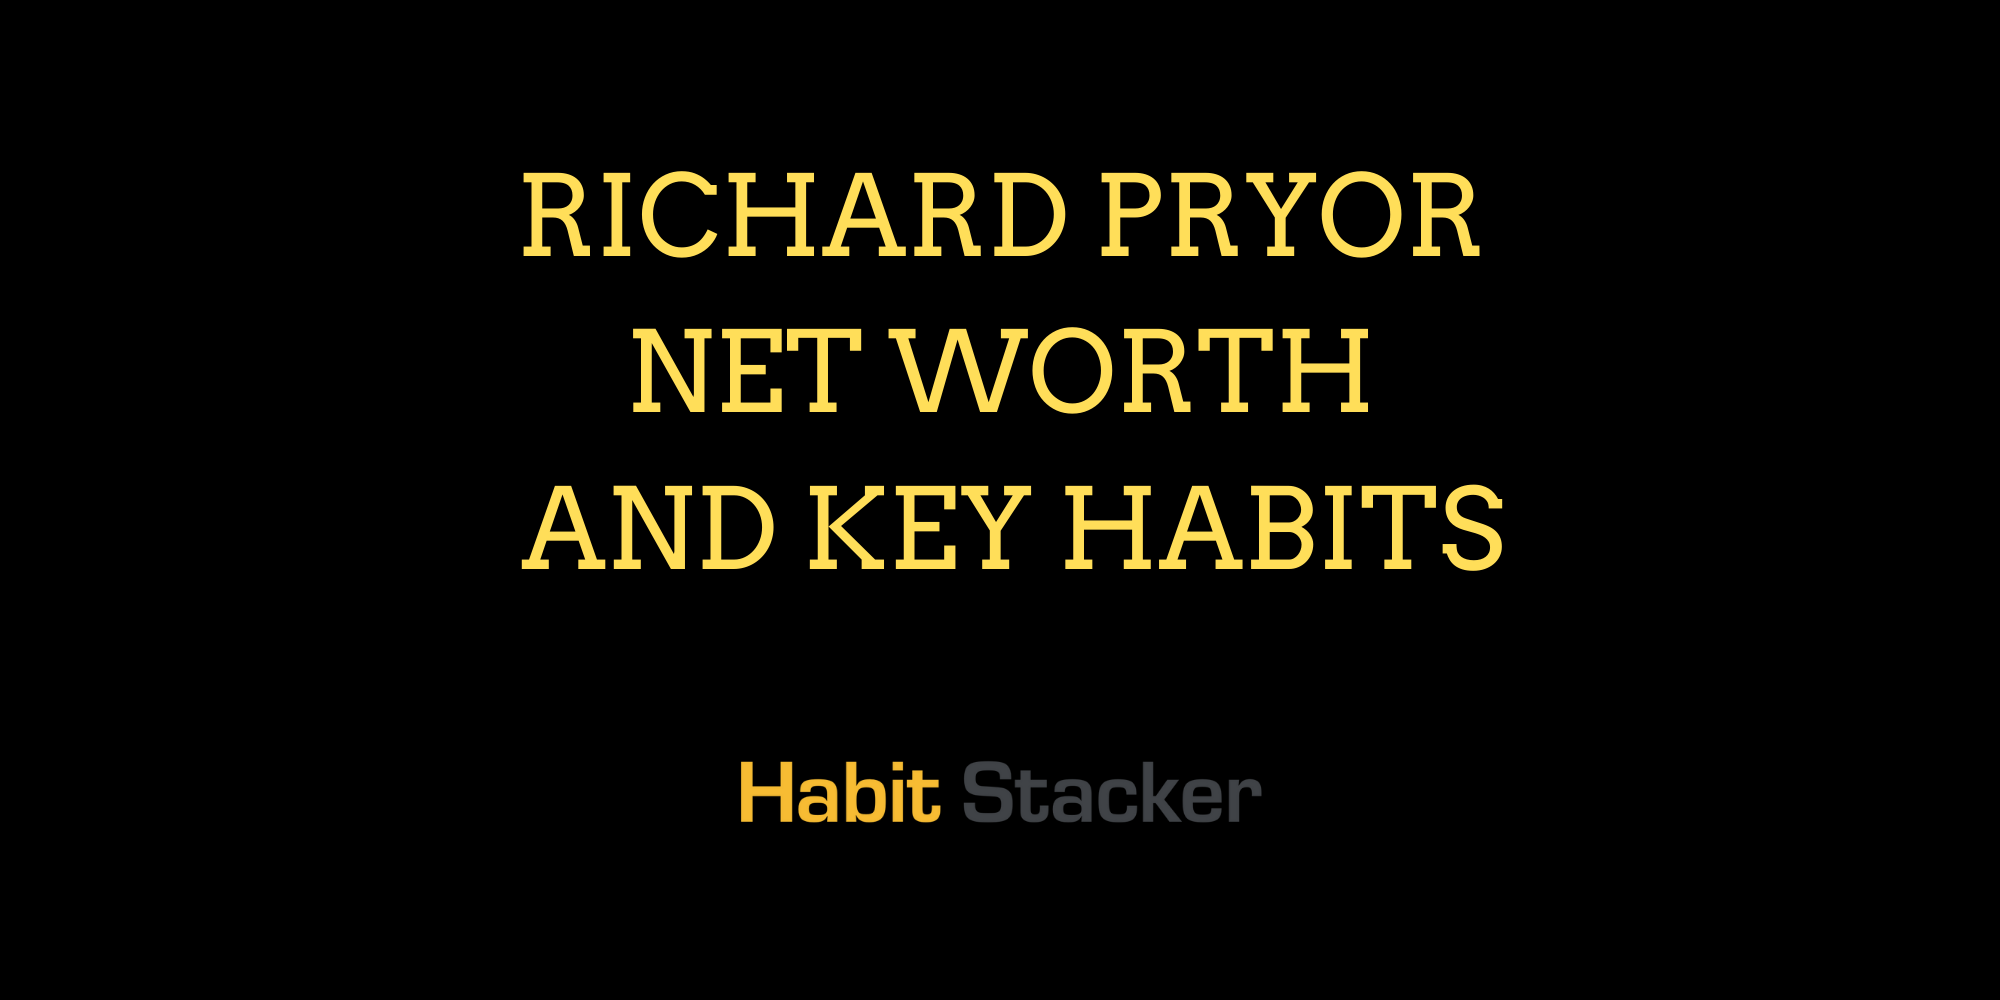 Richard Pryor Net Worth and Key Habits